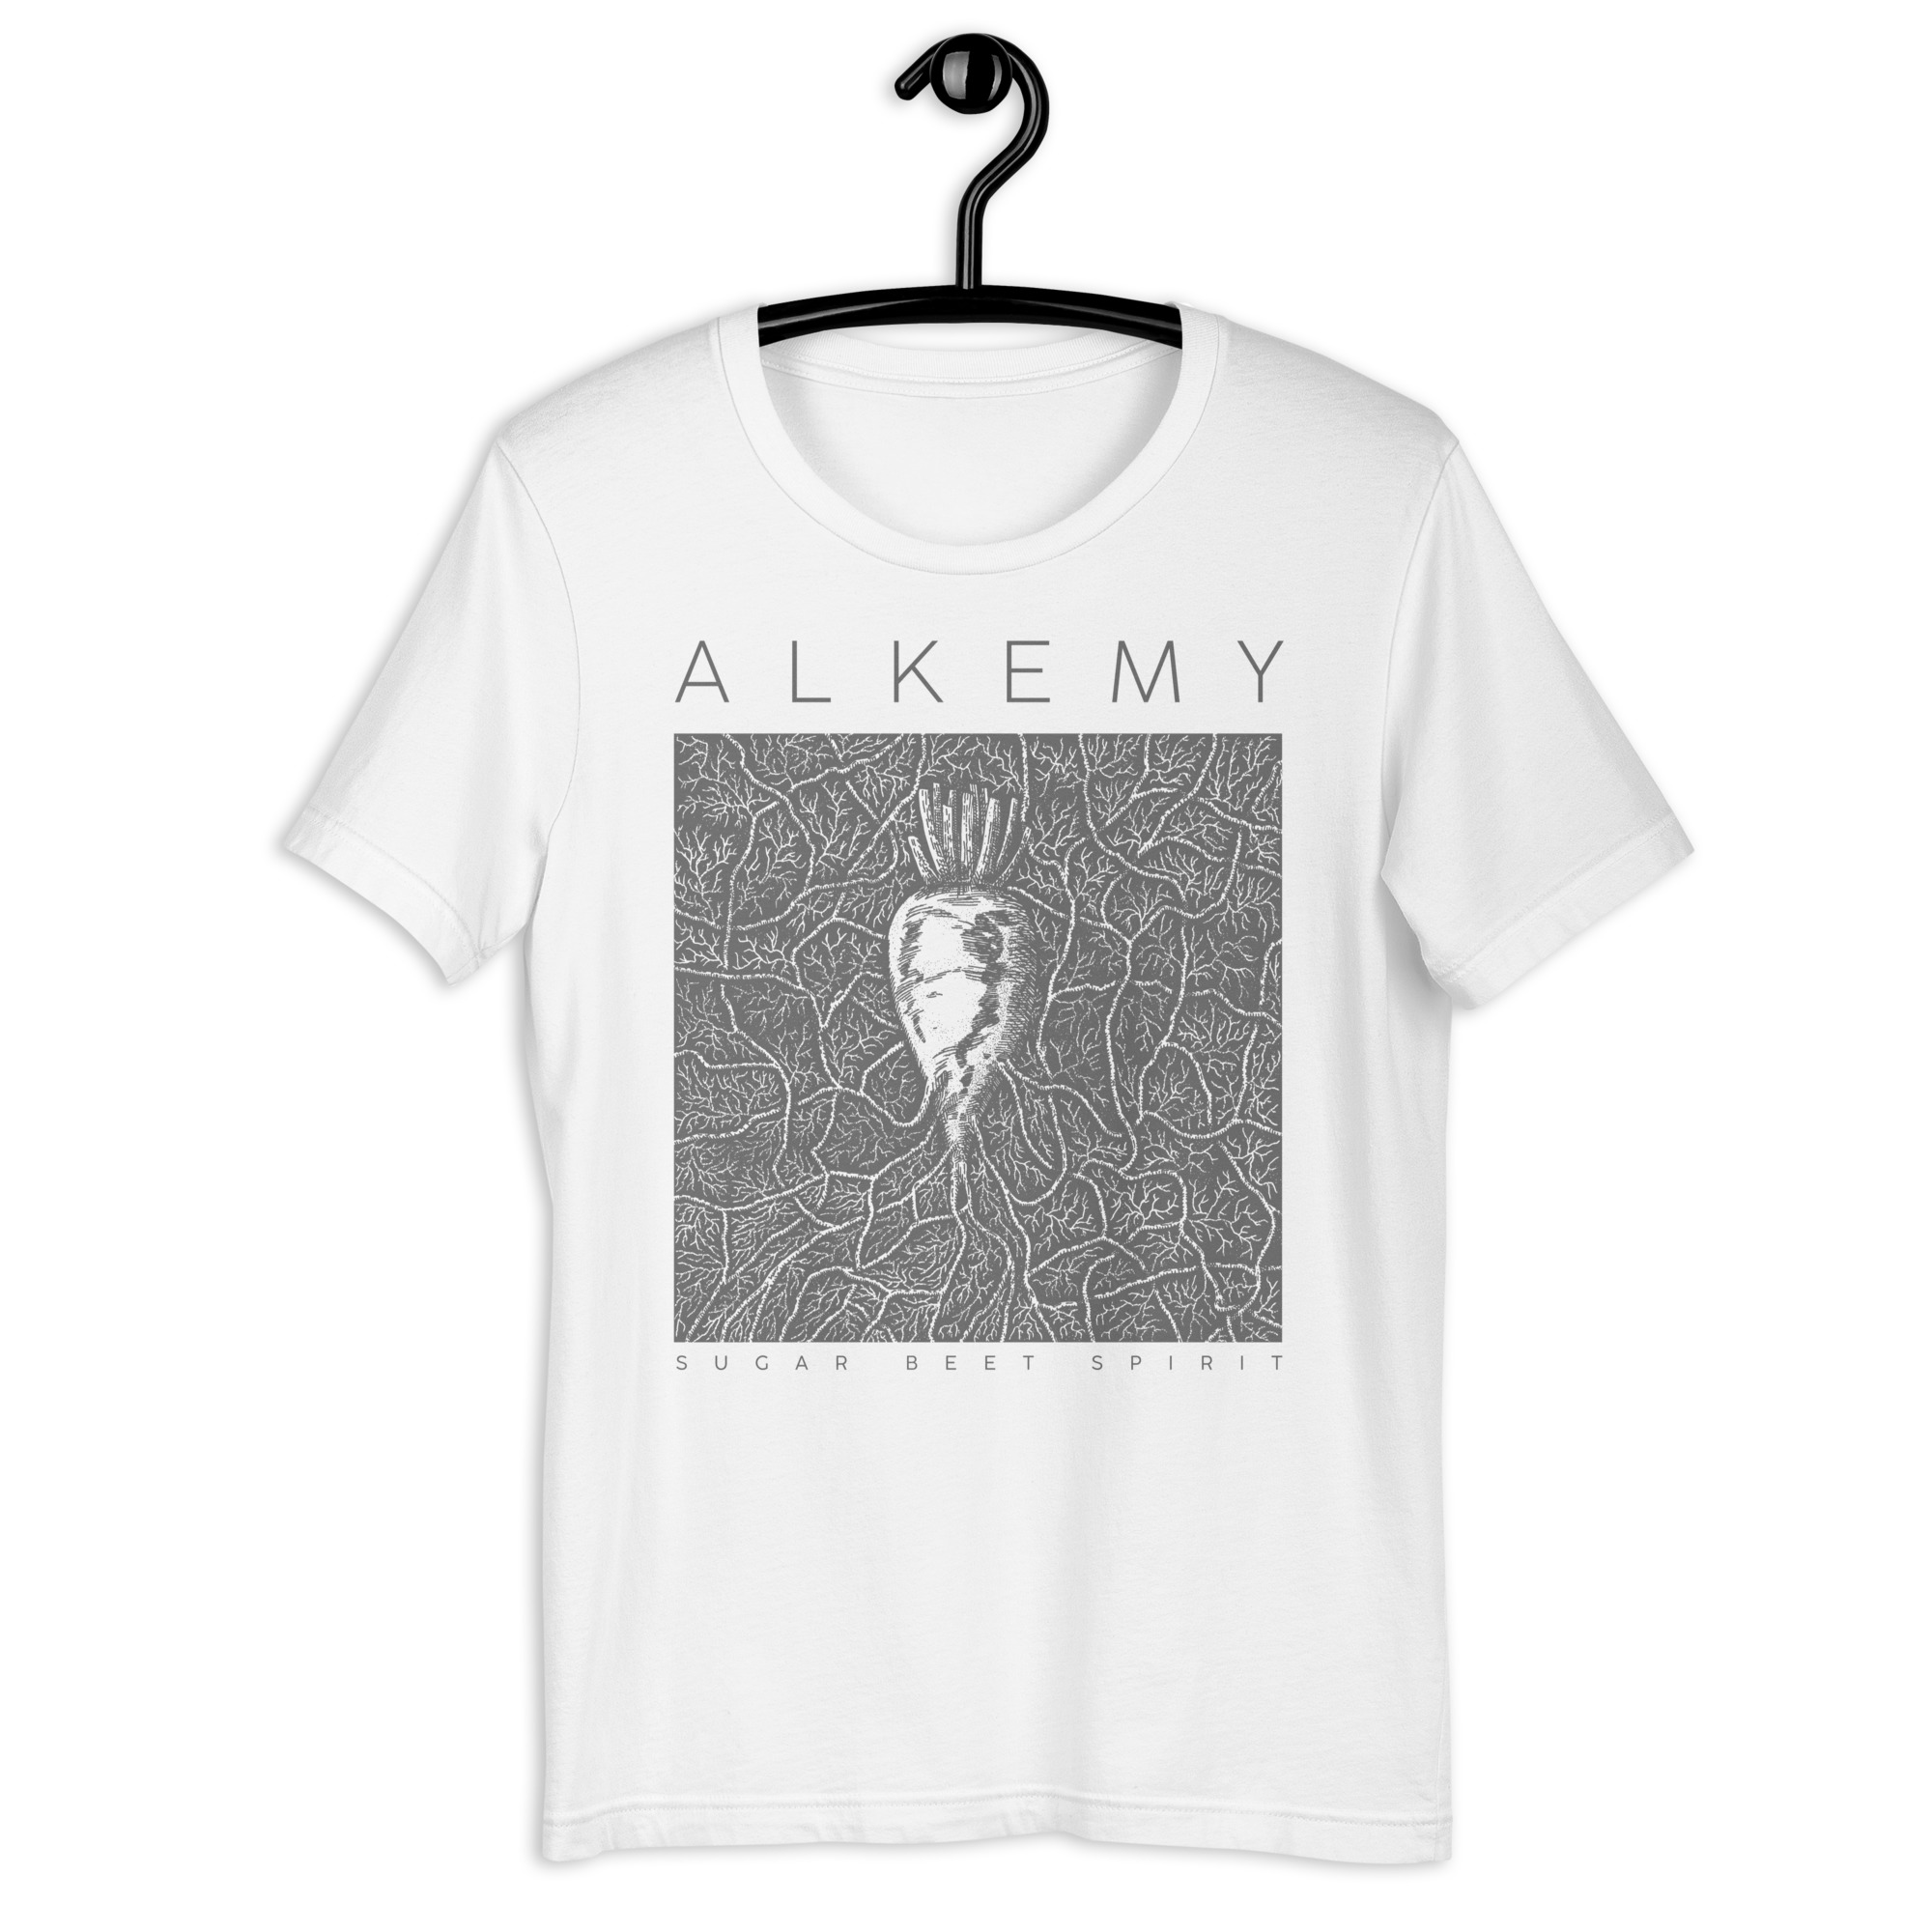 Alkemy shirt